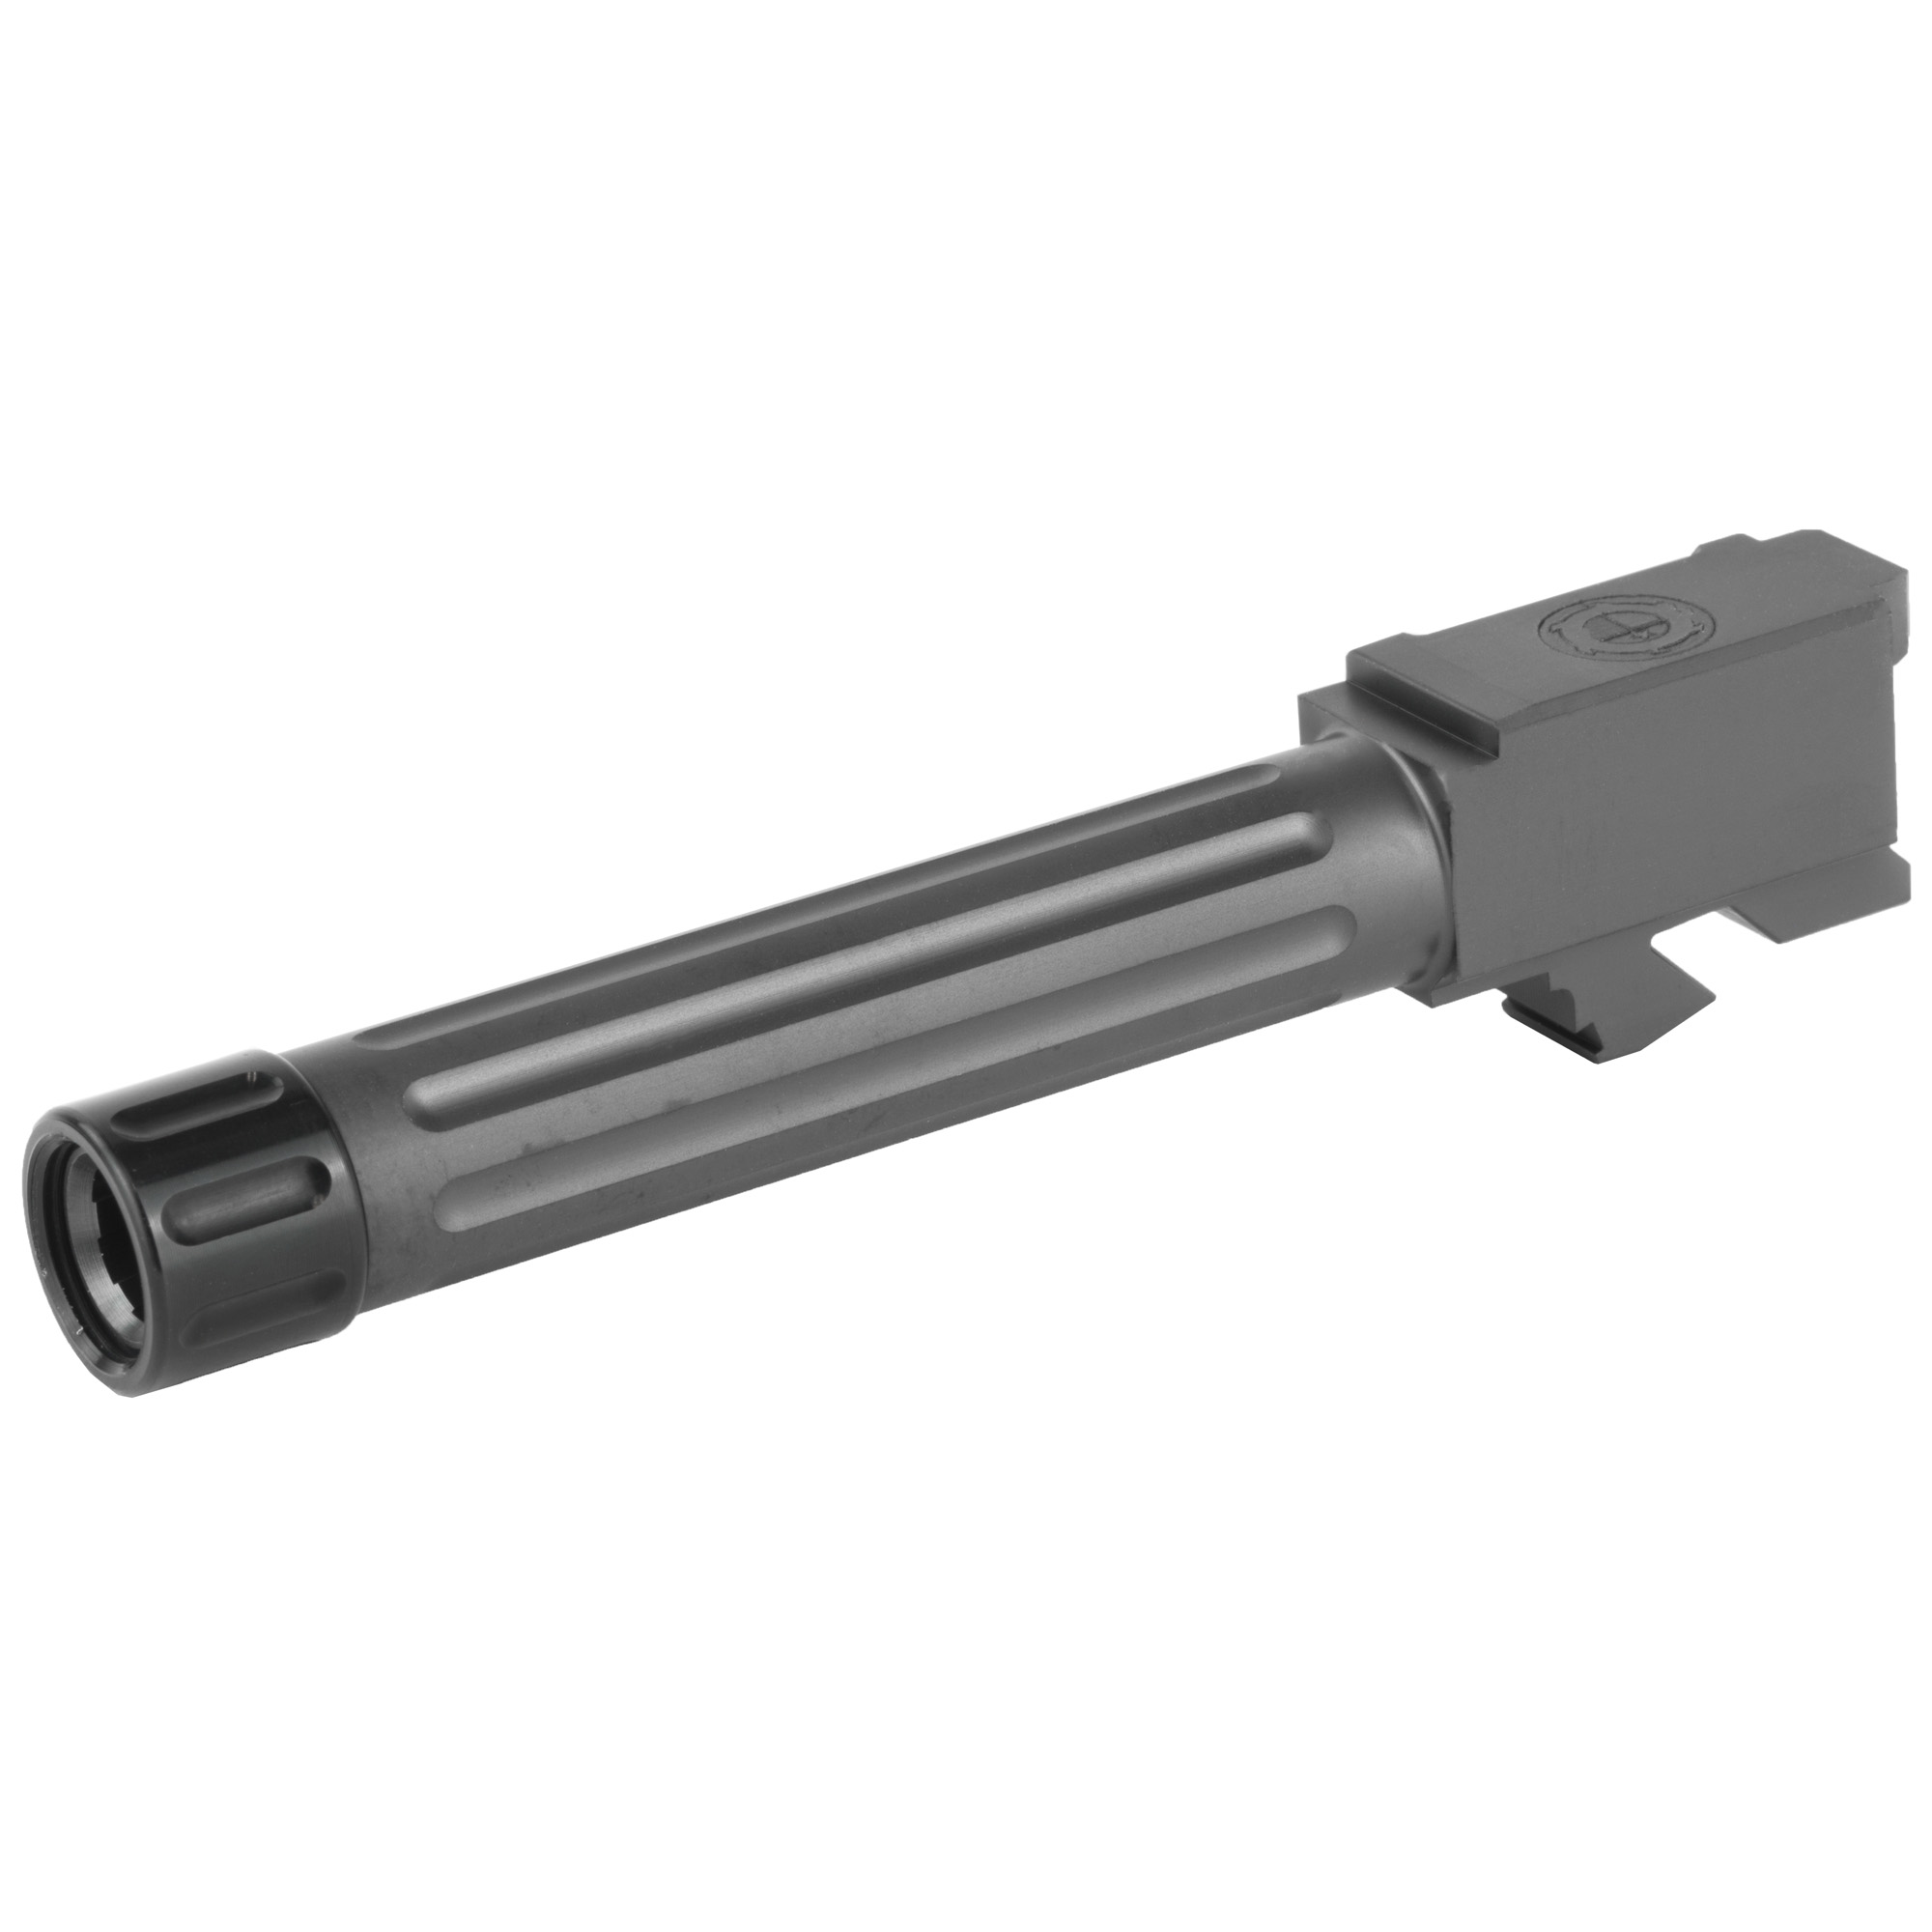 https://cityarsenal.com/product/cmc-triggers-9mm-threaded-barrel-4-01in-fits-glock-19-gen-3-4-black-75521/